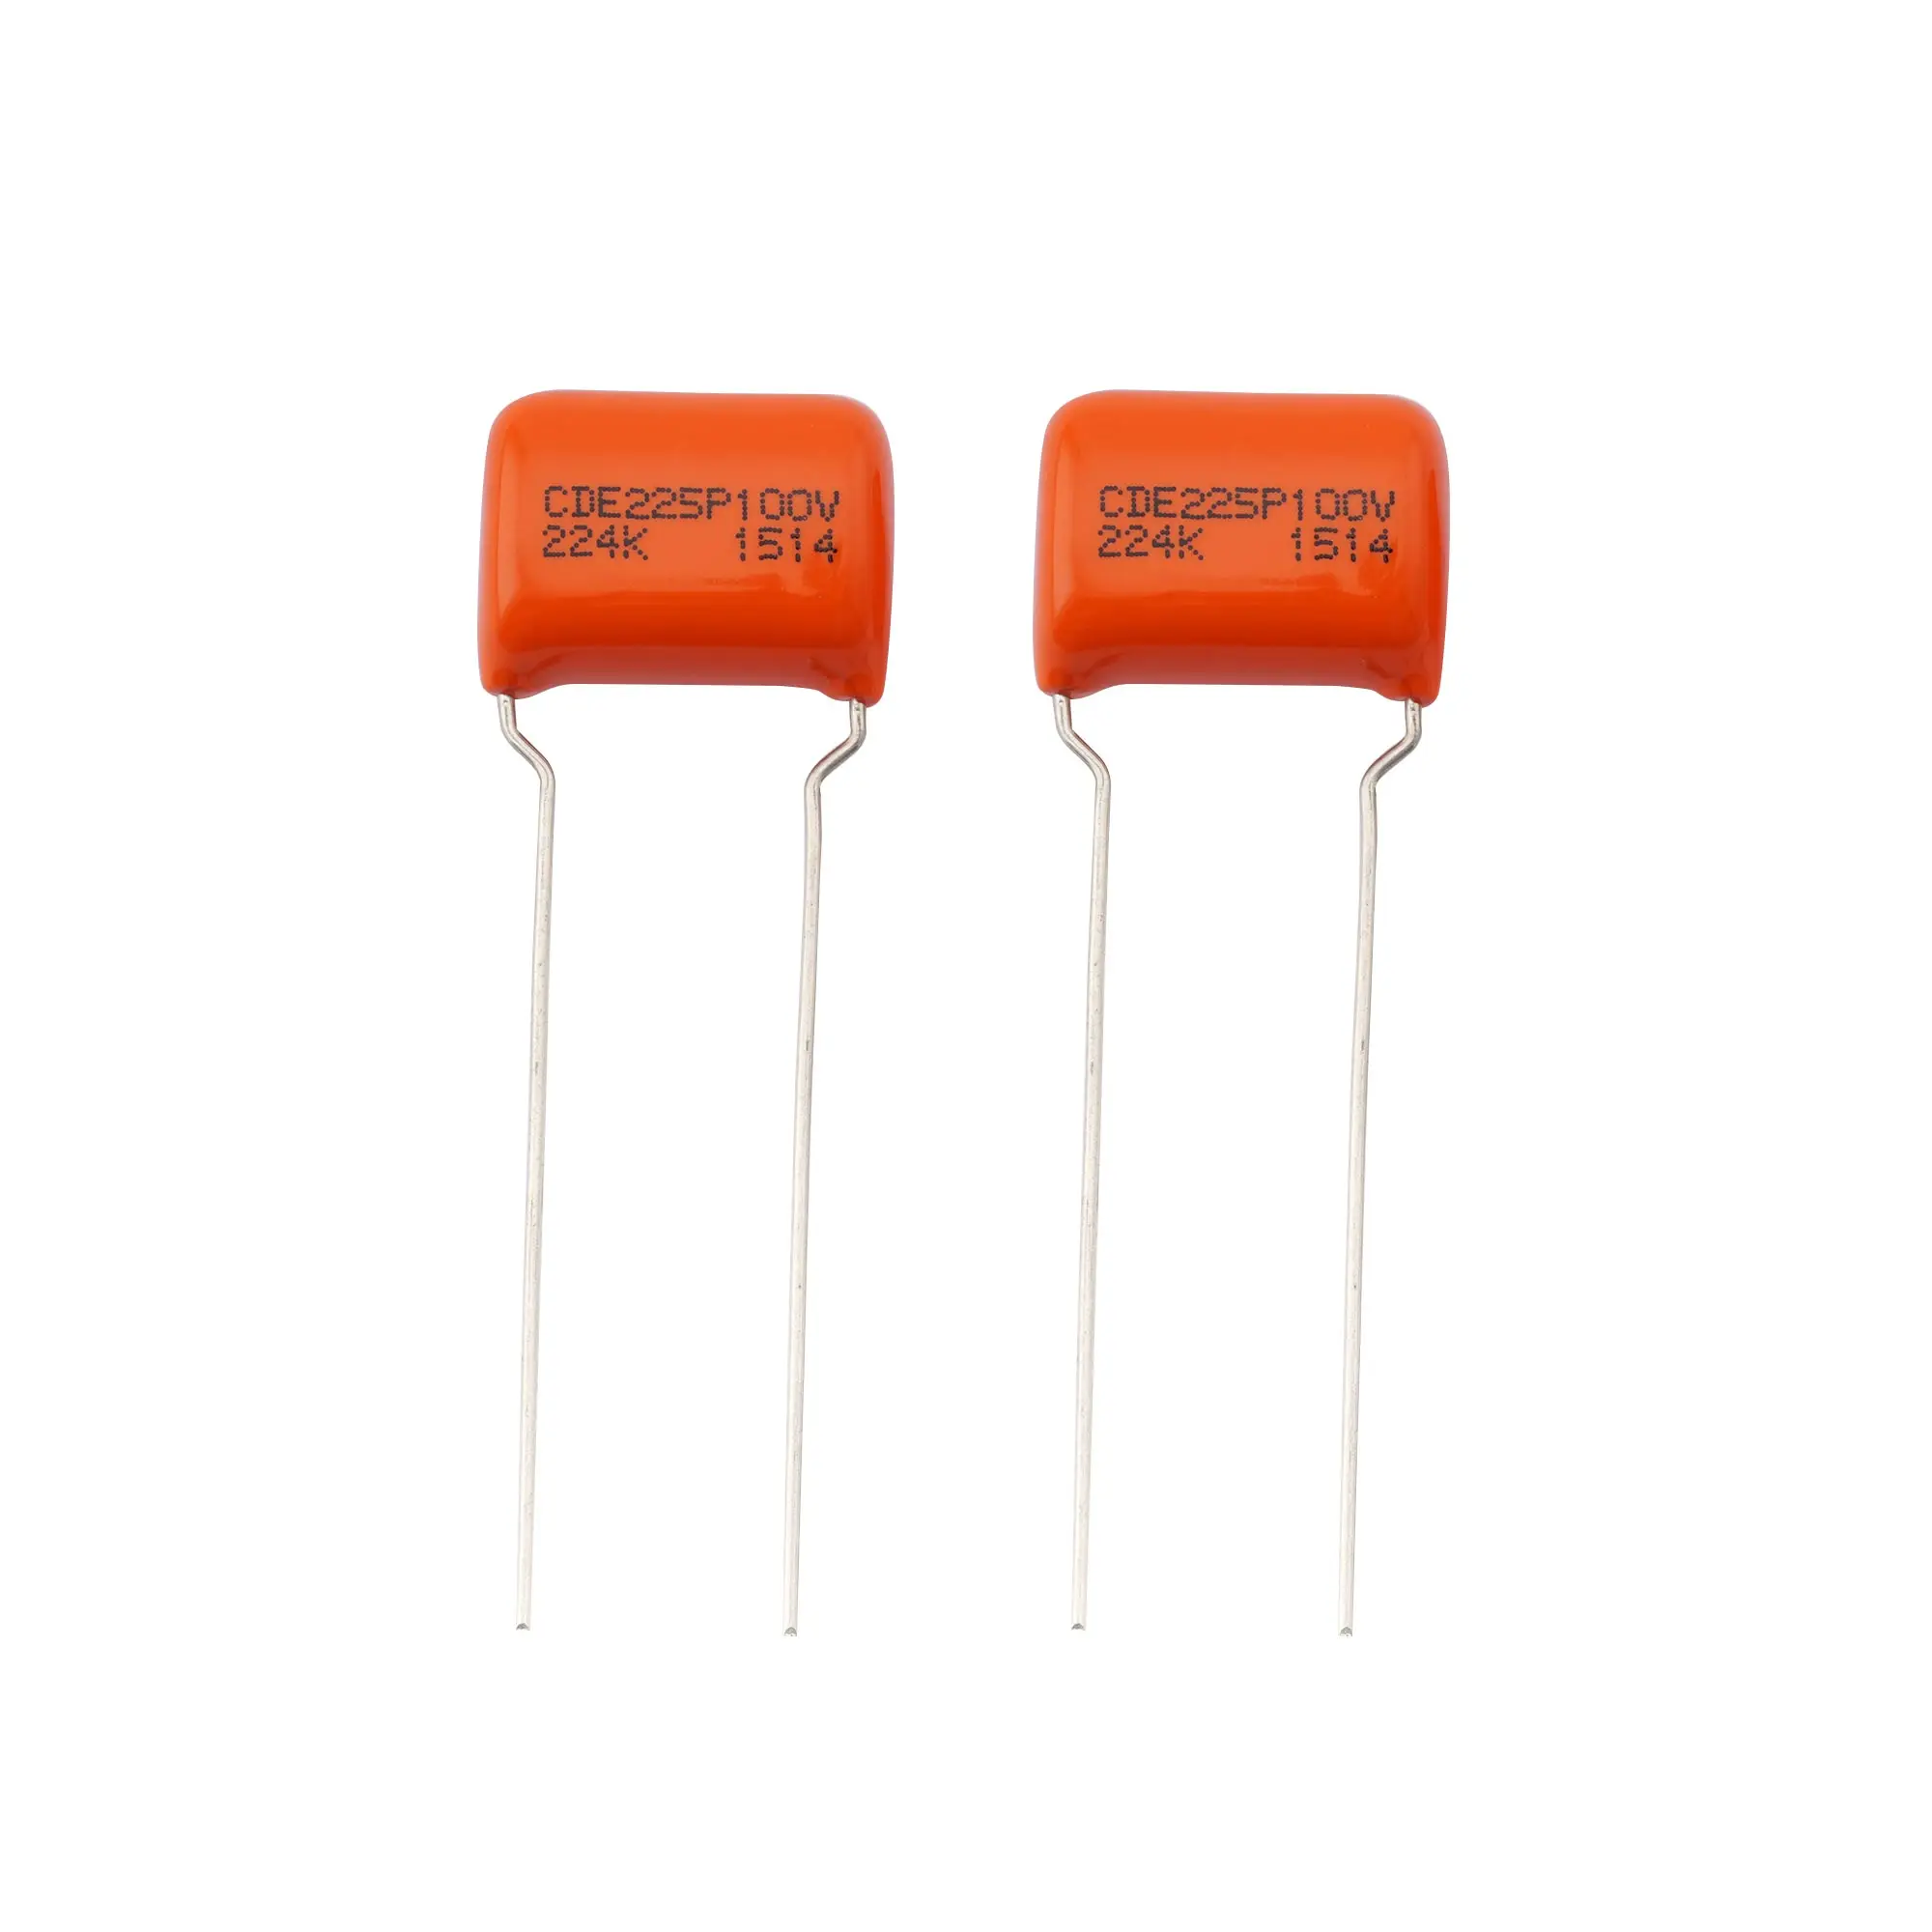 CDE Sprague Orange Drop Capacitors Tone Caps Polyester Film .22uF 225P 224K 100V for Guitar or Bass Set of 2